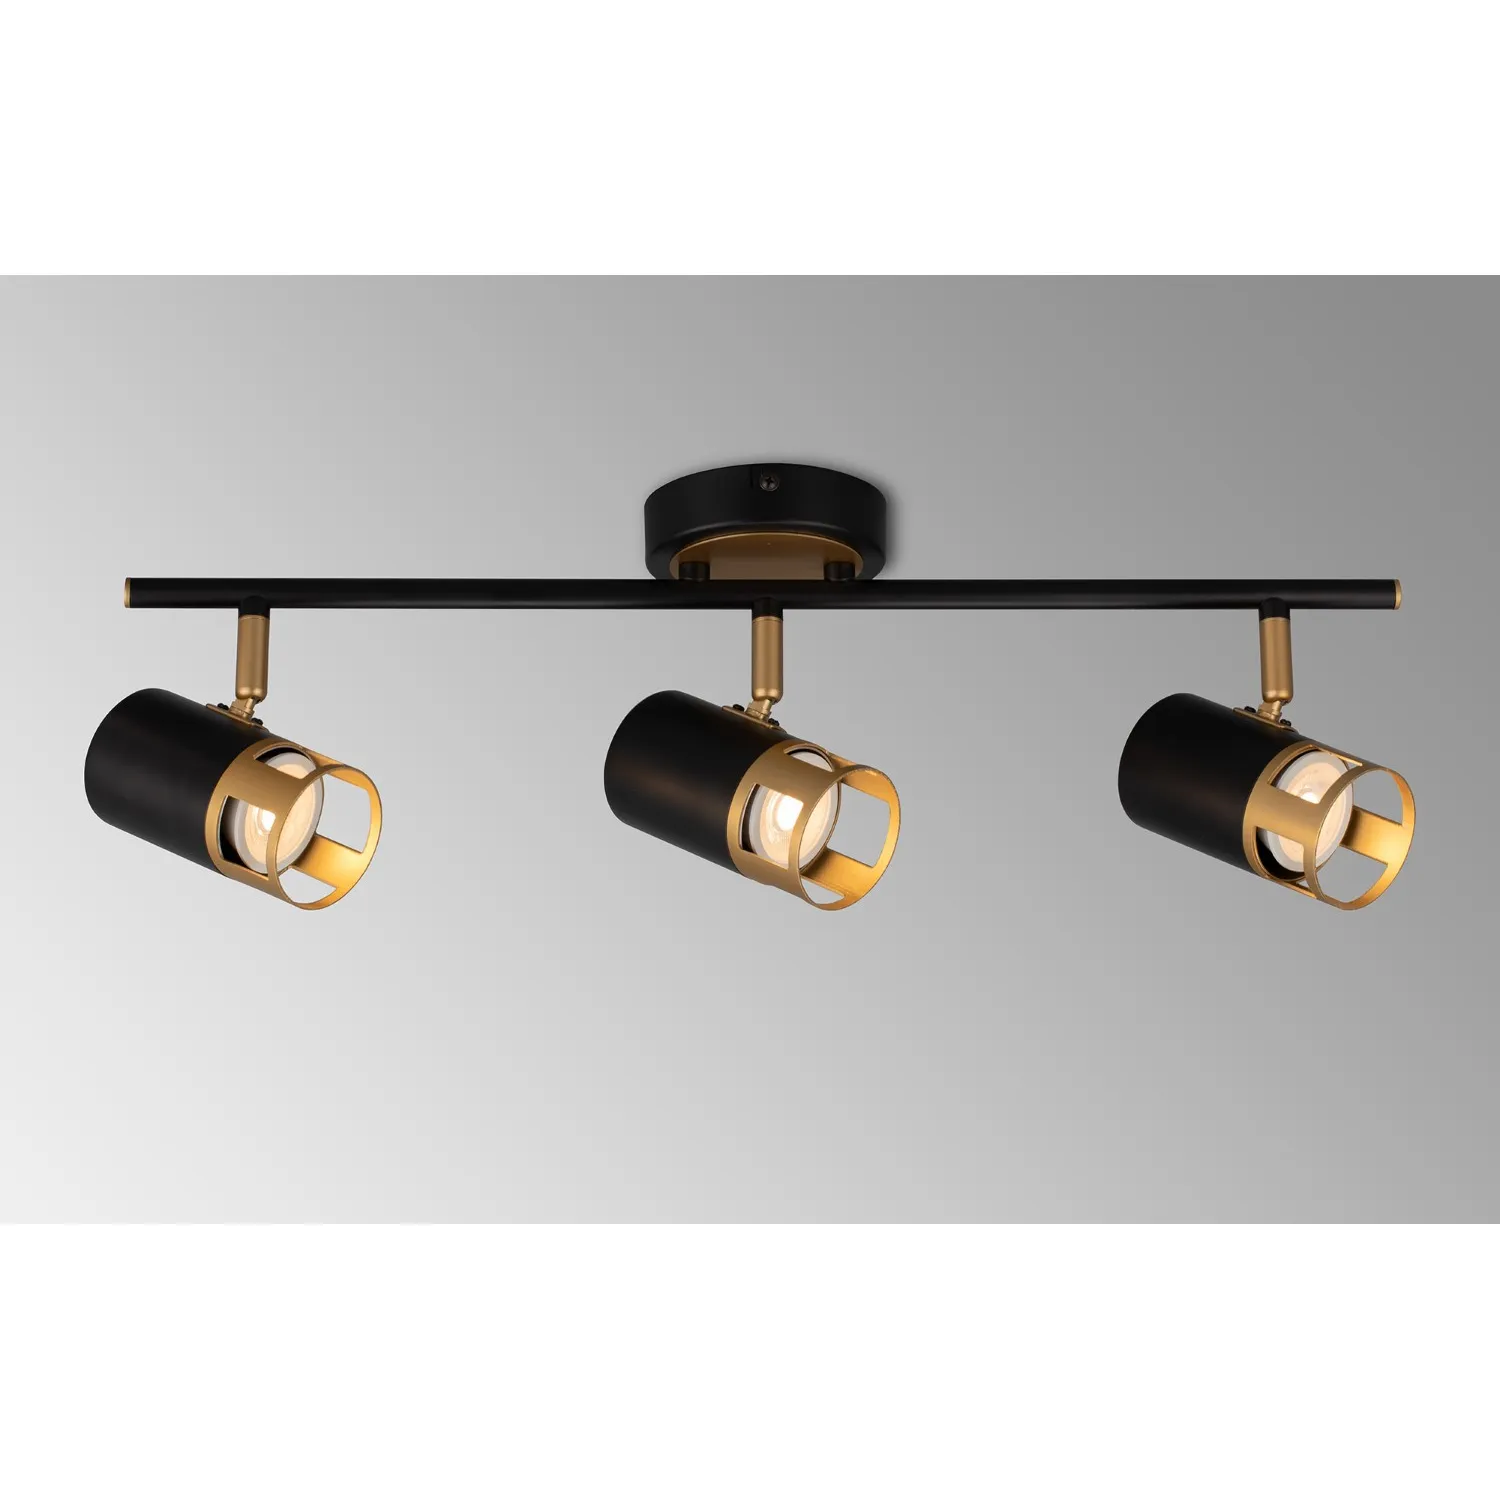 Essex 3 Light Linear Bar Spotlight GU10, Black Painted Gold